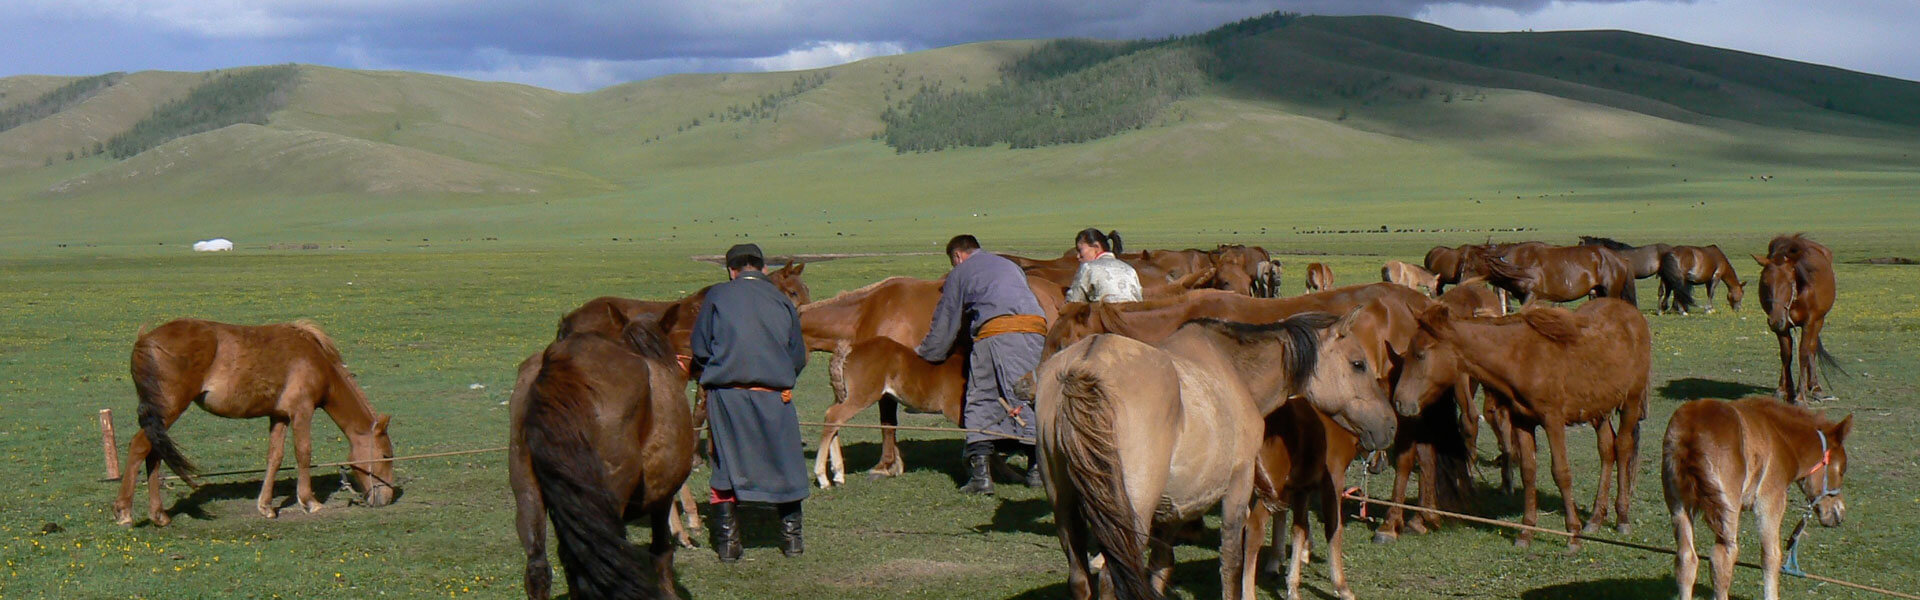 Mongolië Altai reis